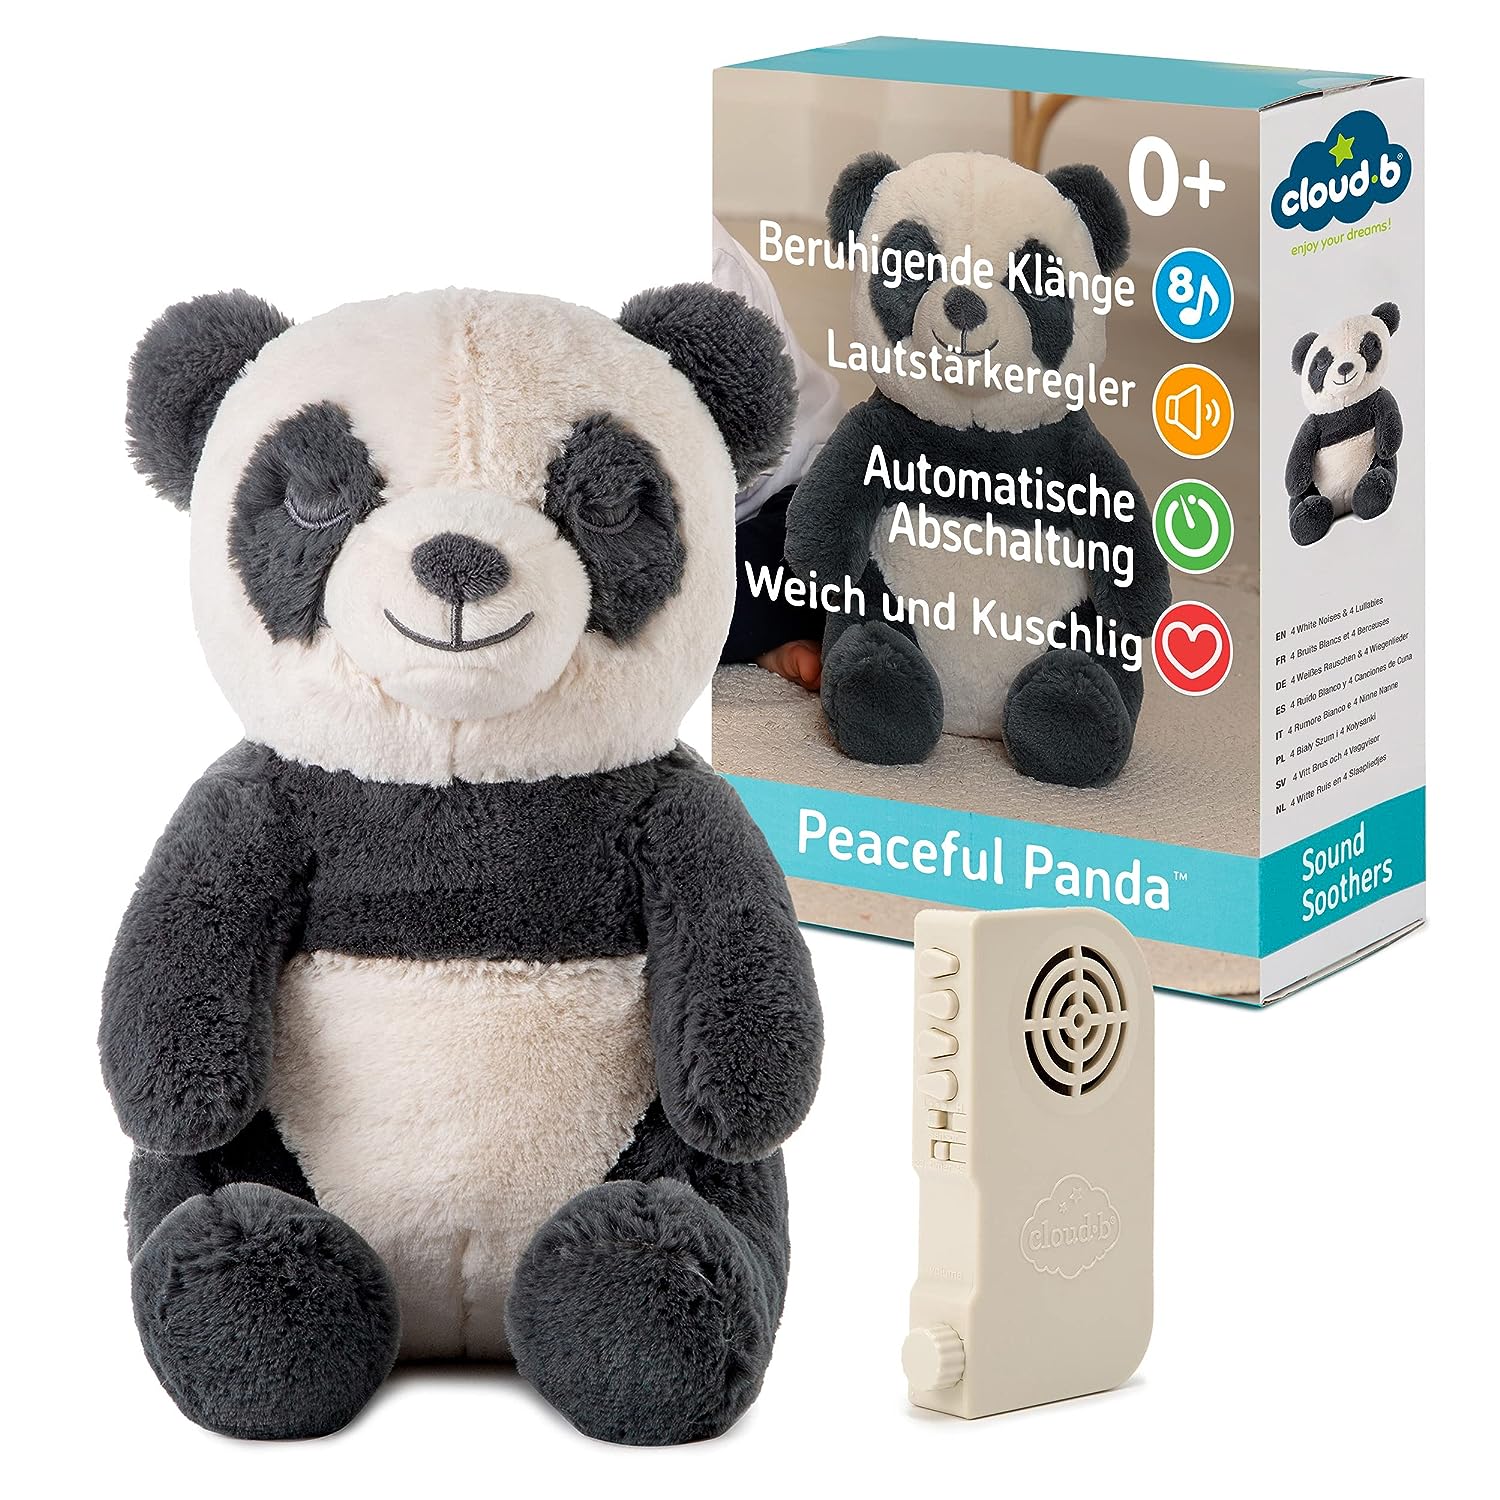 Peaceful-Panda-Einschlafhilfe-cloud-b-berlindeluxe-panda-box-schwarz-weiß